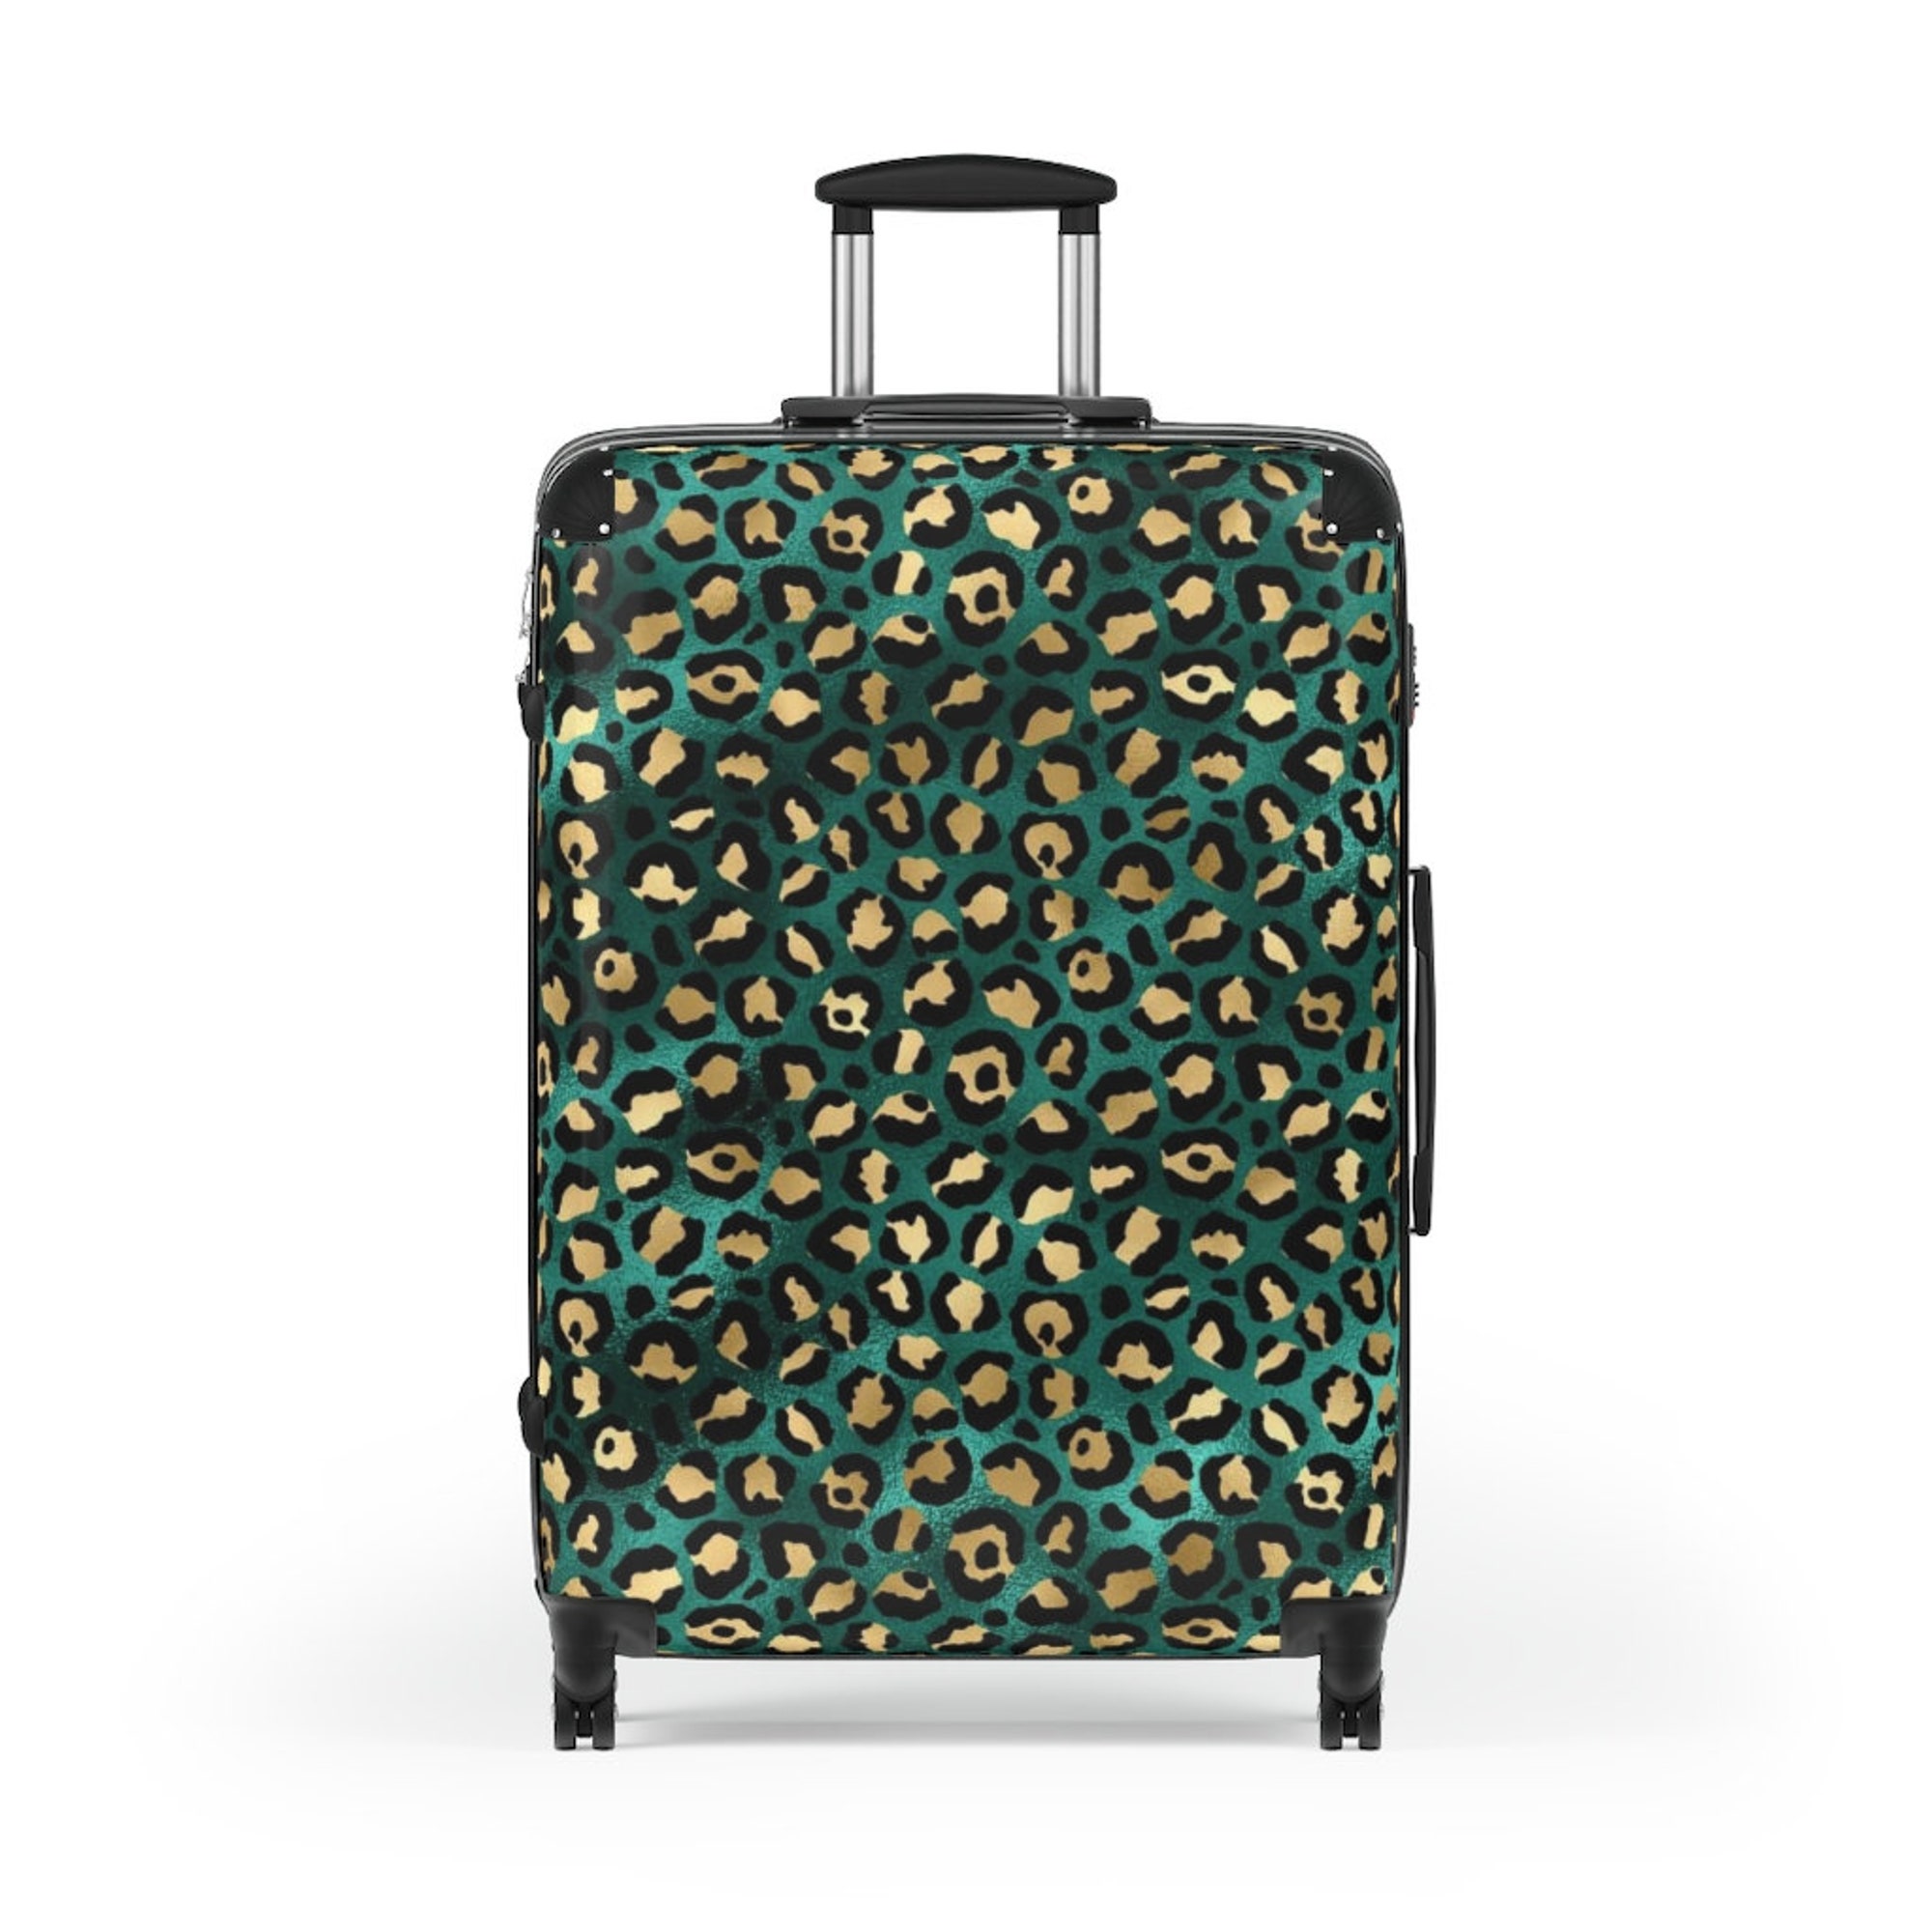 The Green Envy Leopard Suitcase